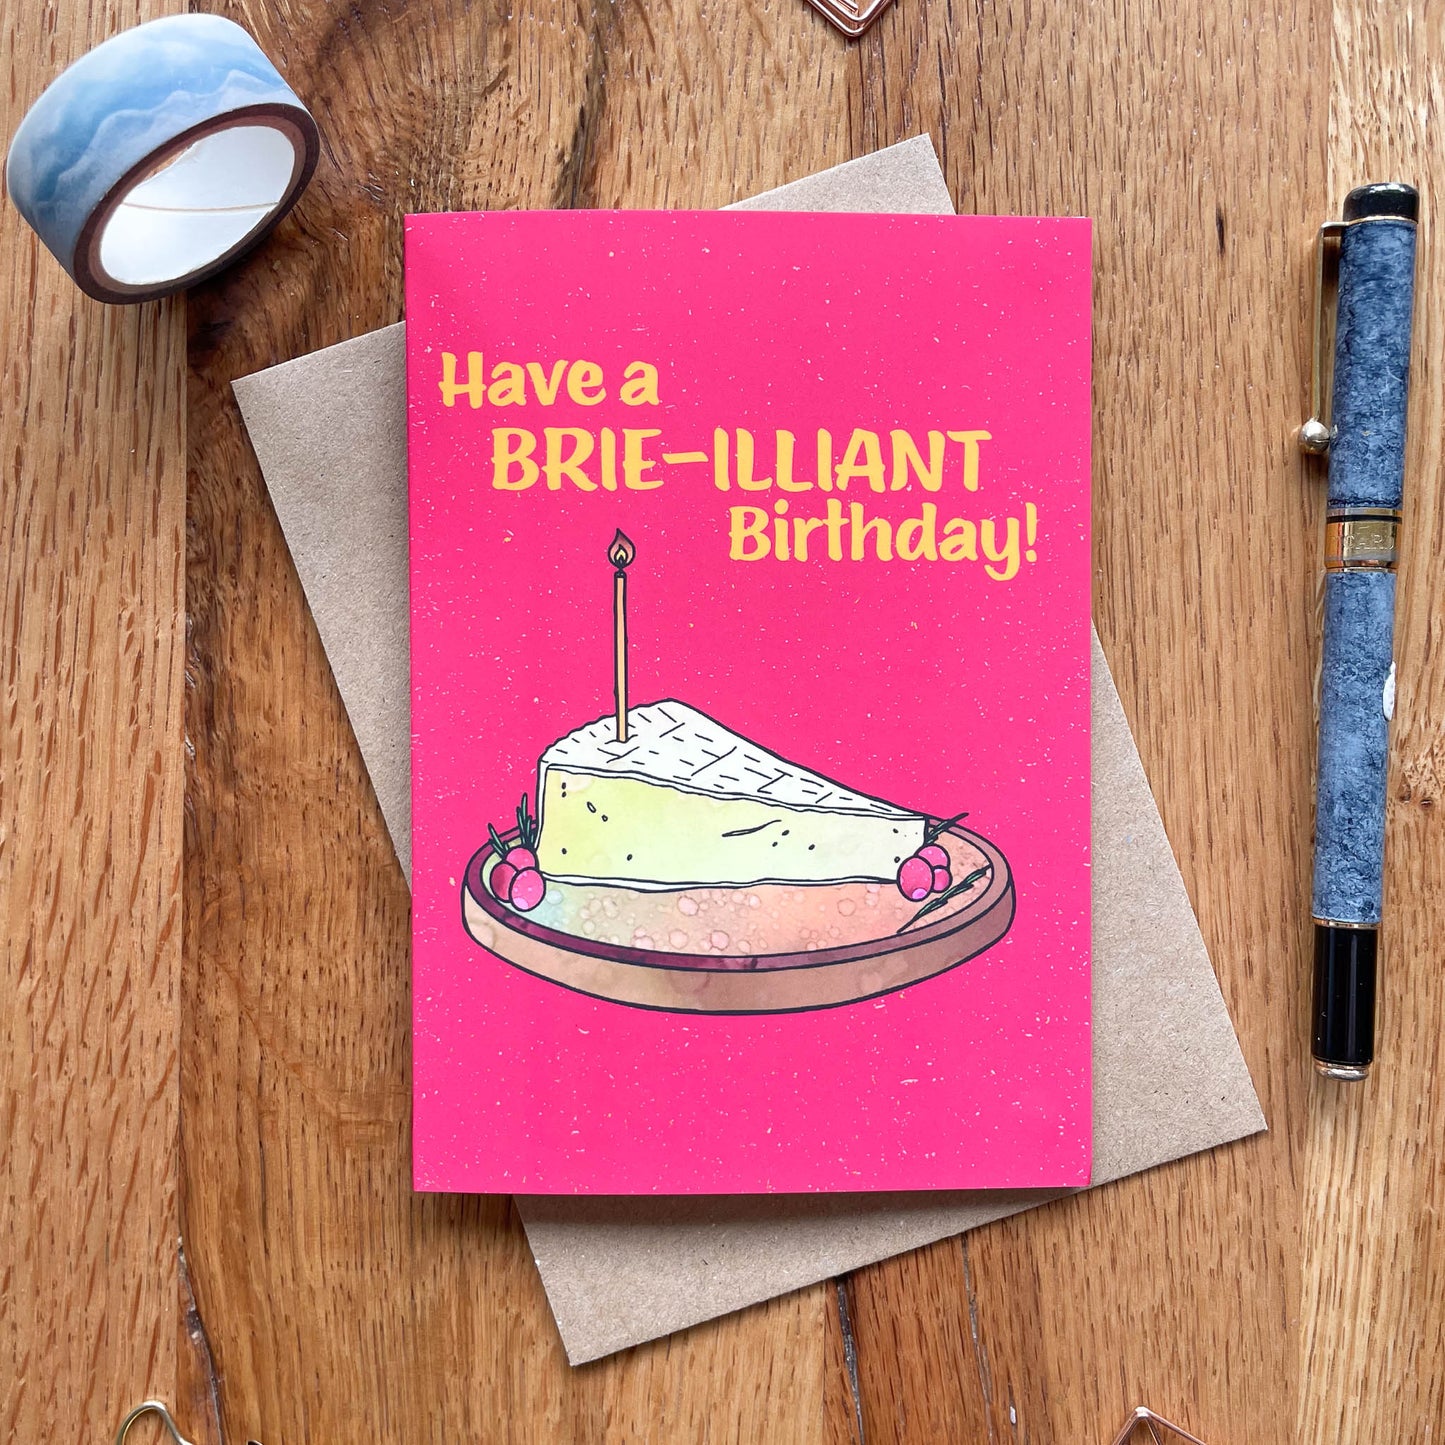 Cheese Themed Birthday Card - Brie/ Brilliant Birthday